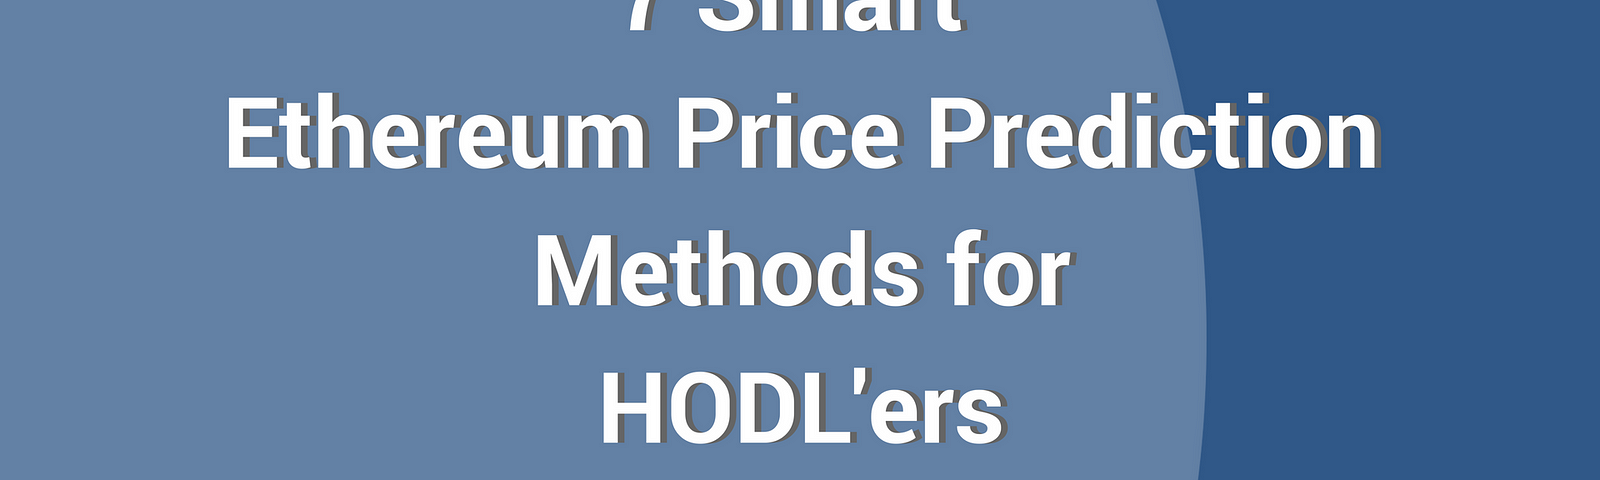 7 Smart Ethereum Price Prediction Methods for HODLers